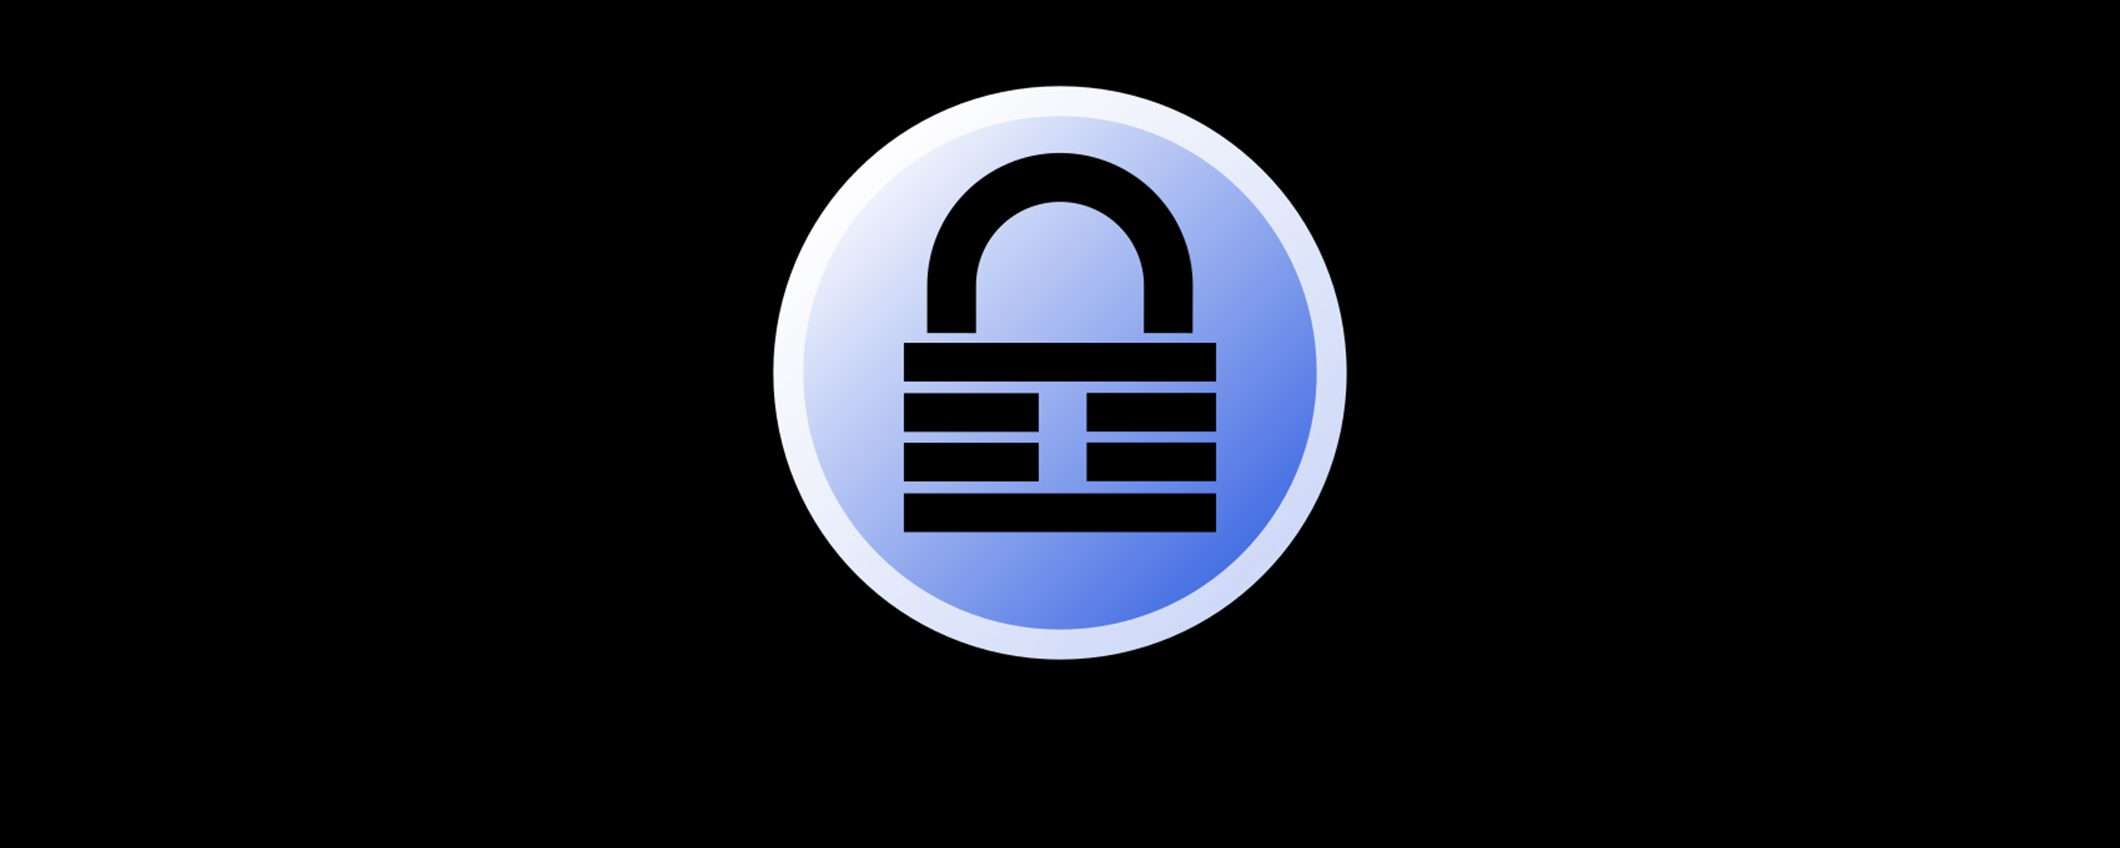 KeePass: possibile vulnerabilità nel password manager